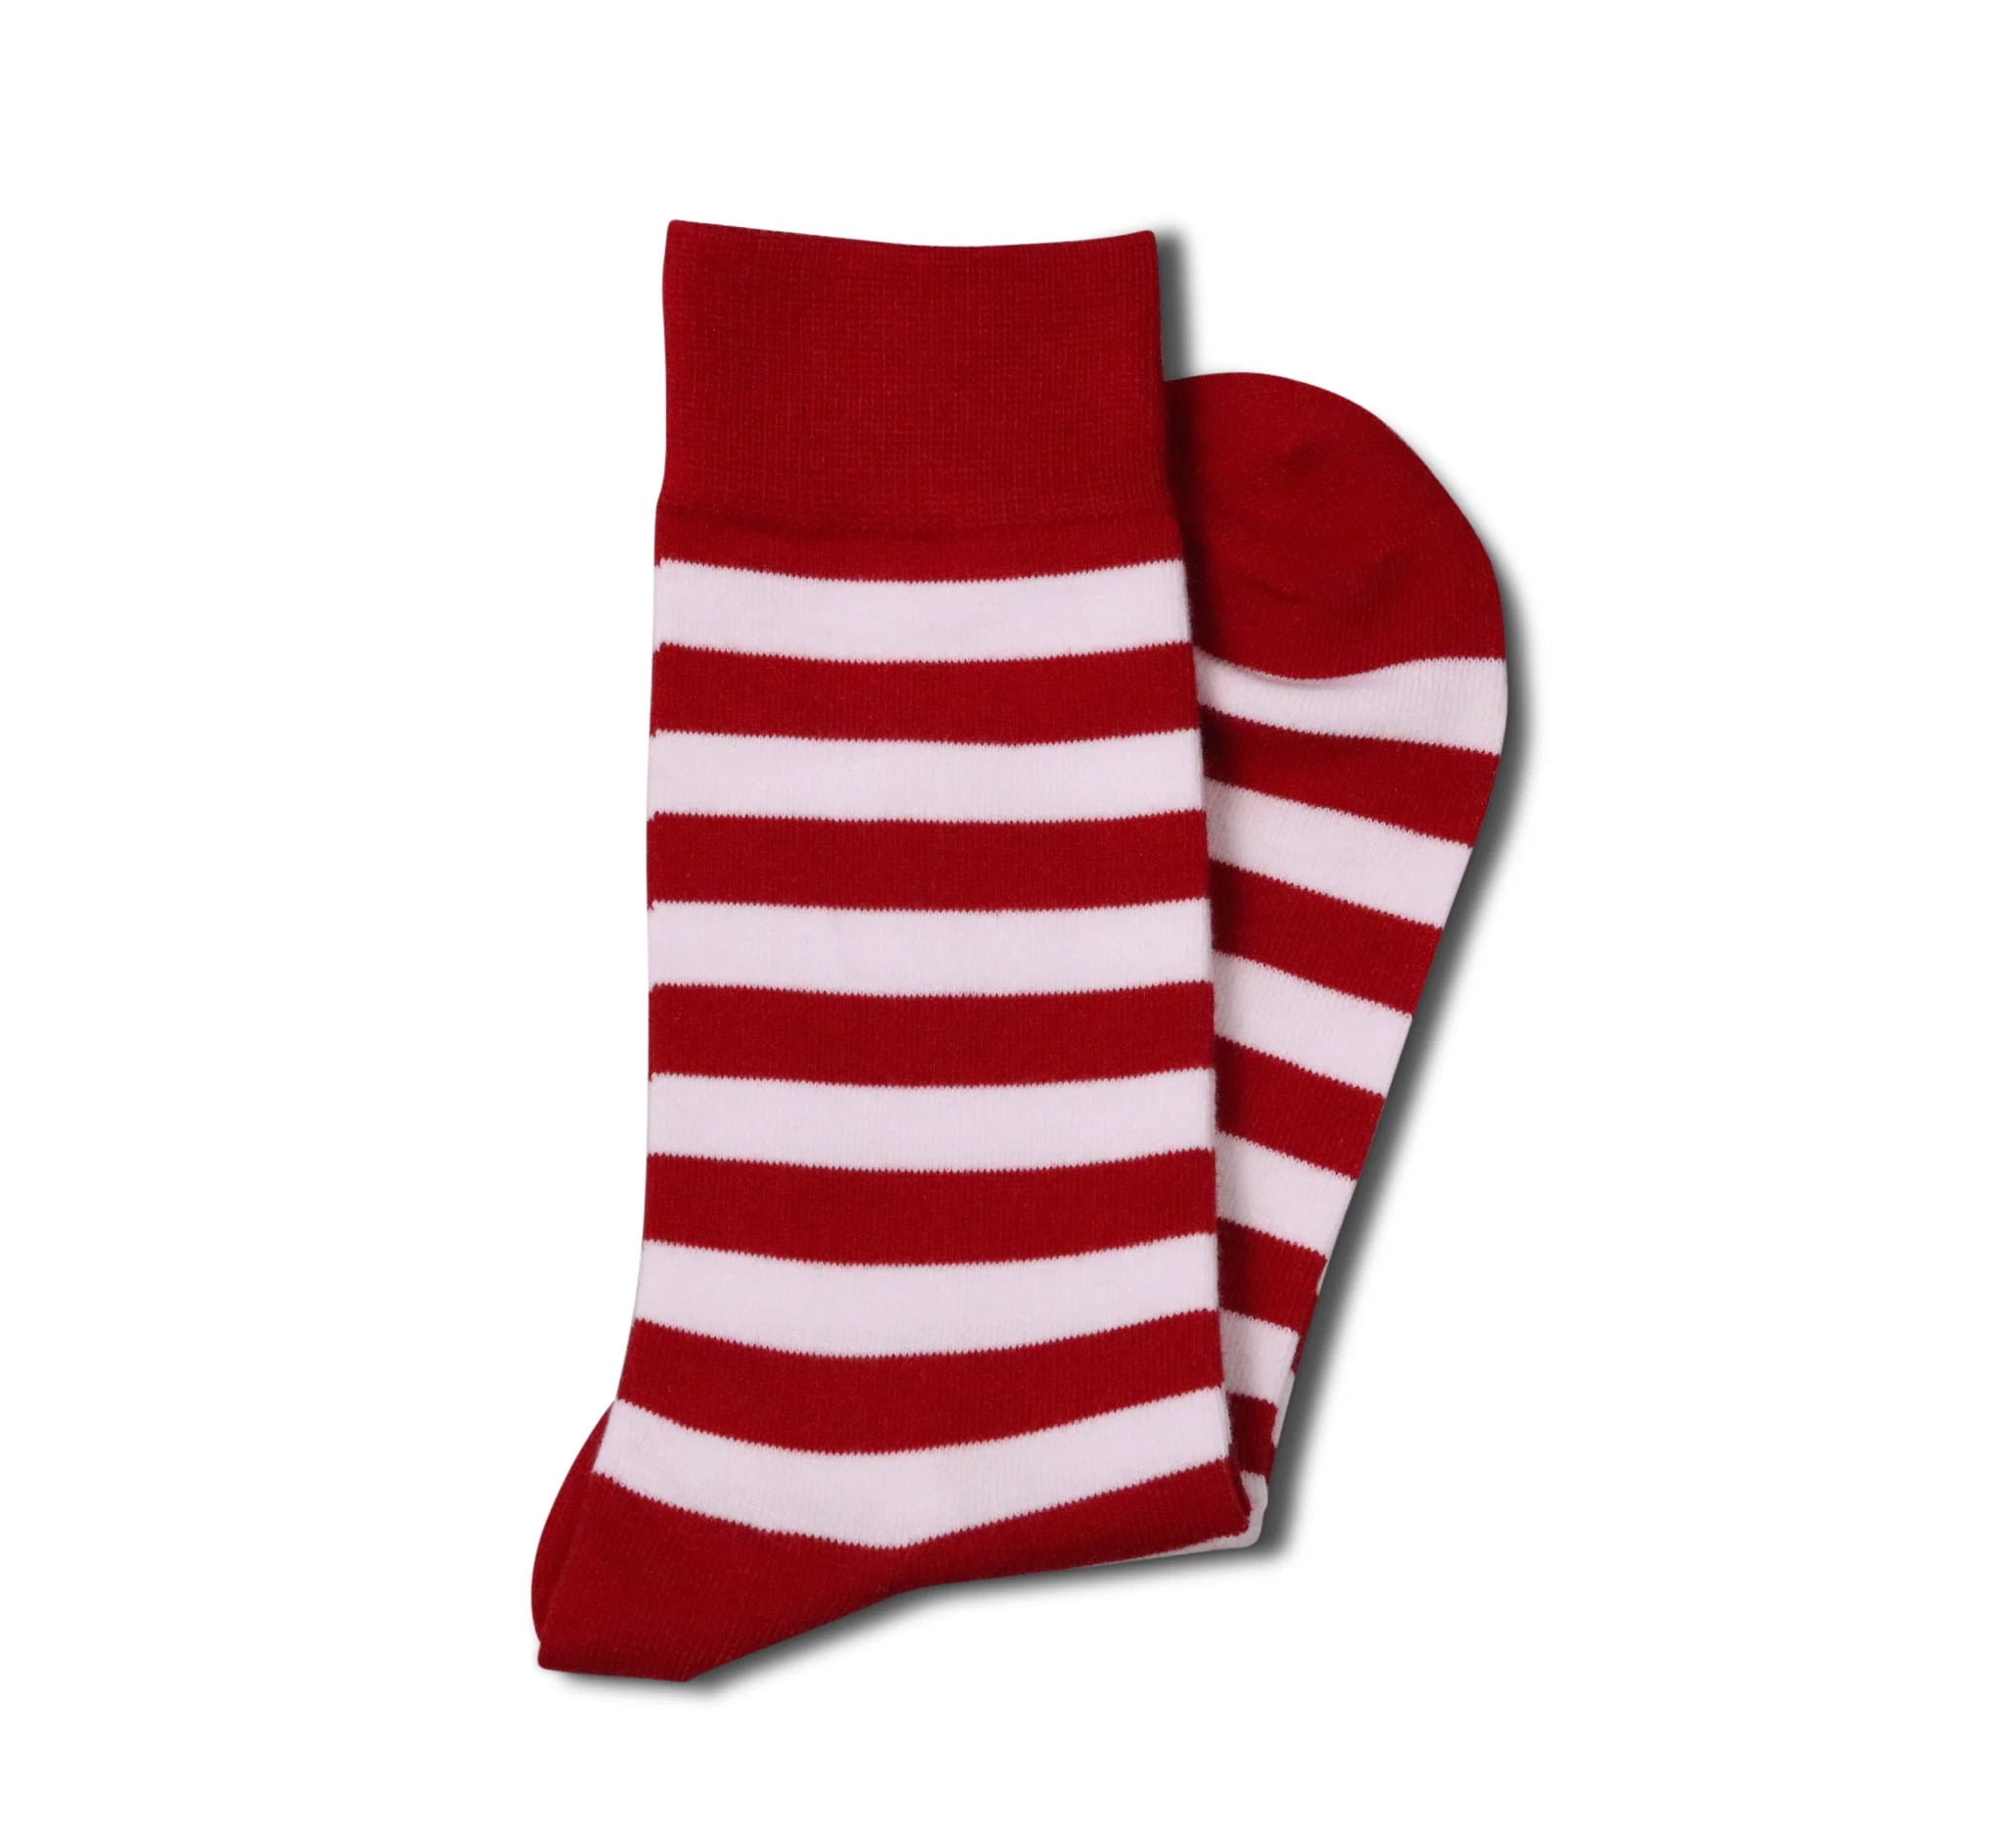 Red and White Striped Socks - Walmart.com